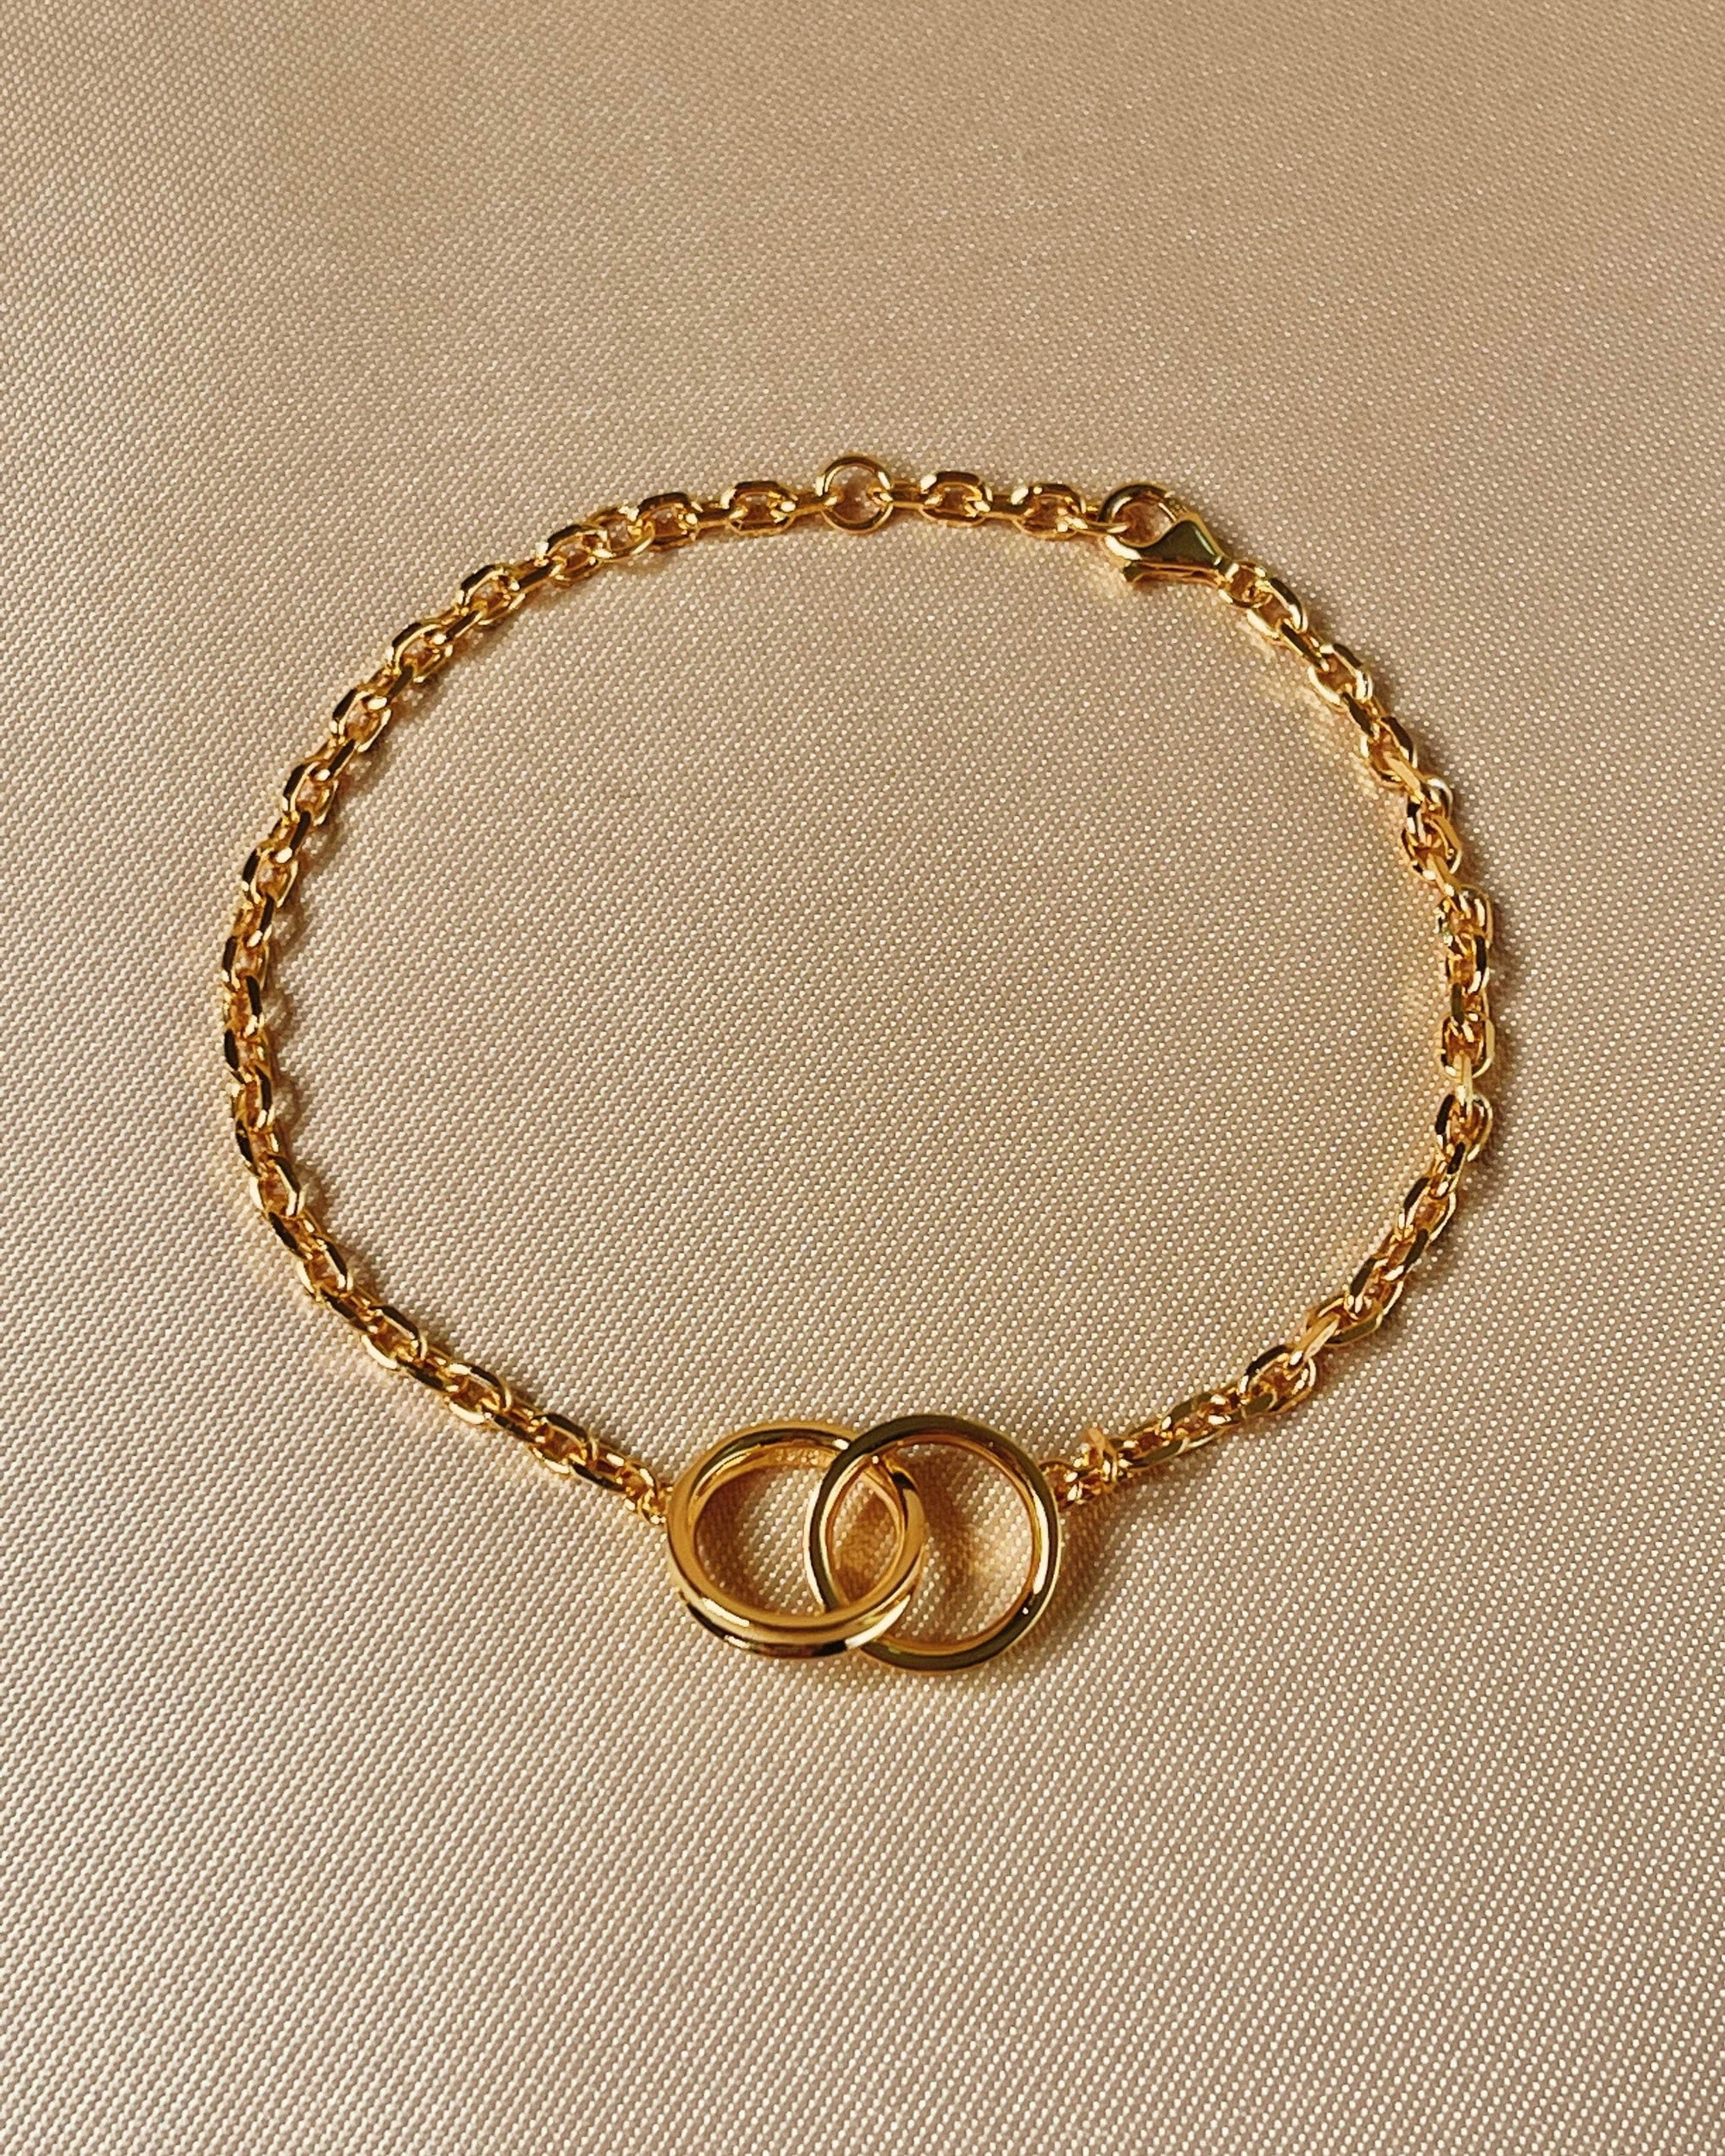 So Dainty Co. Bracelets Alison Gold Bracelet Gold Plated 925 Sterling Silver Jewelry